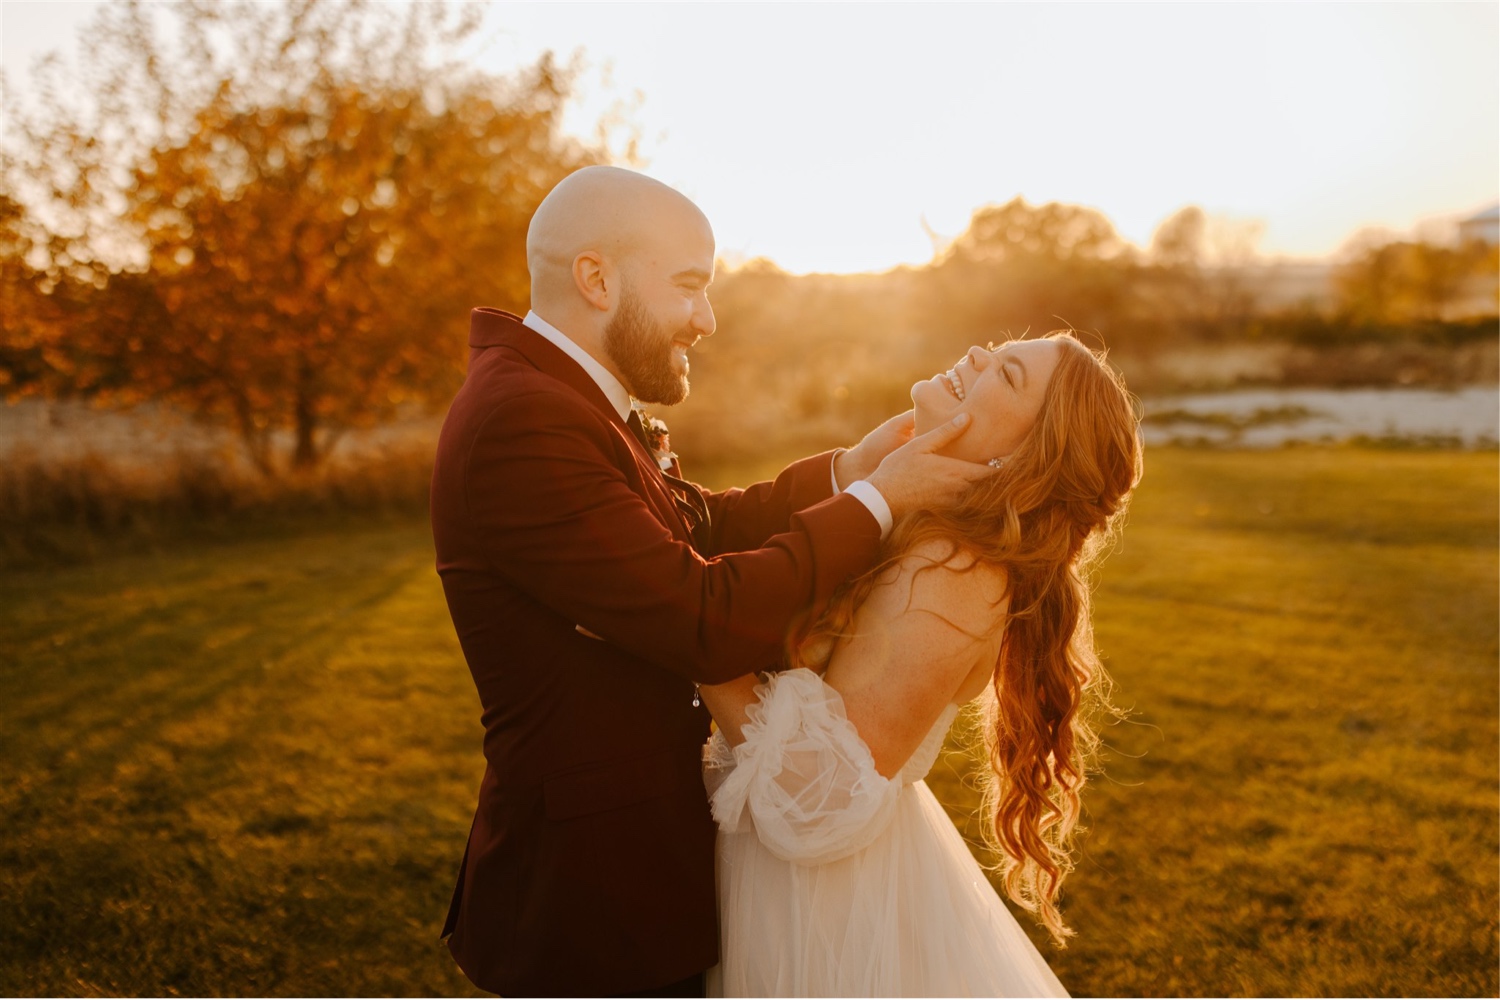 intimate fall wedding by Hanna Walkowaik Photography California wedding photographer